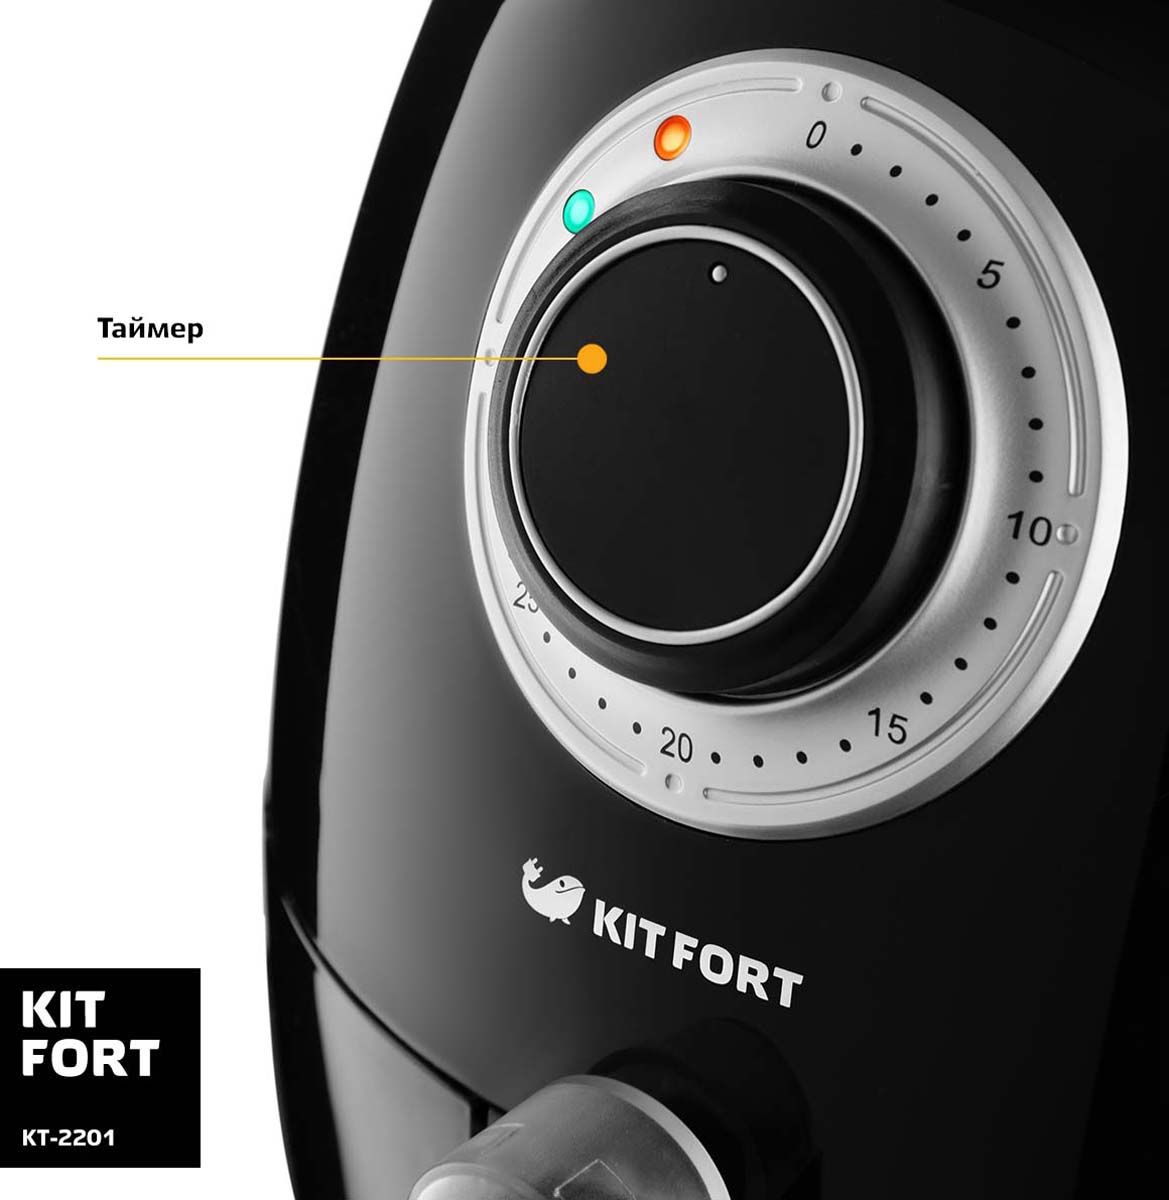  Kitfort -2201